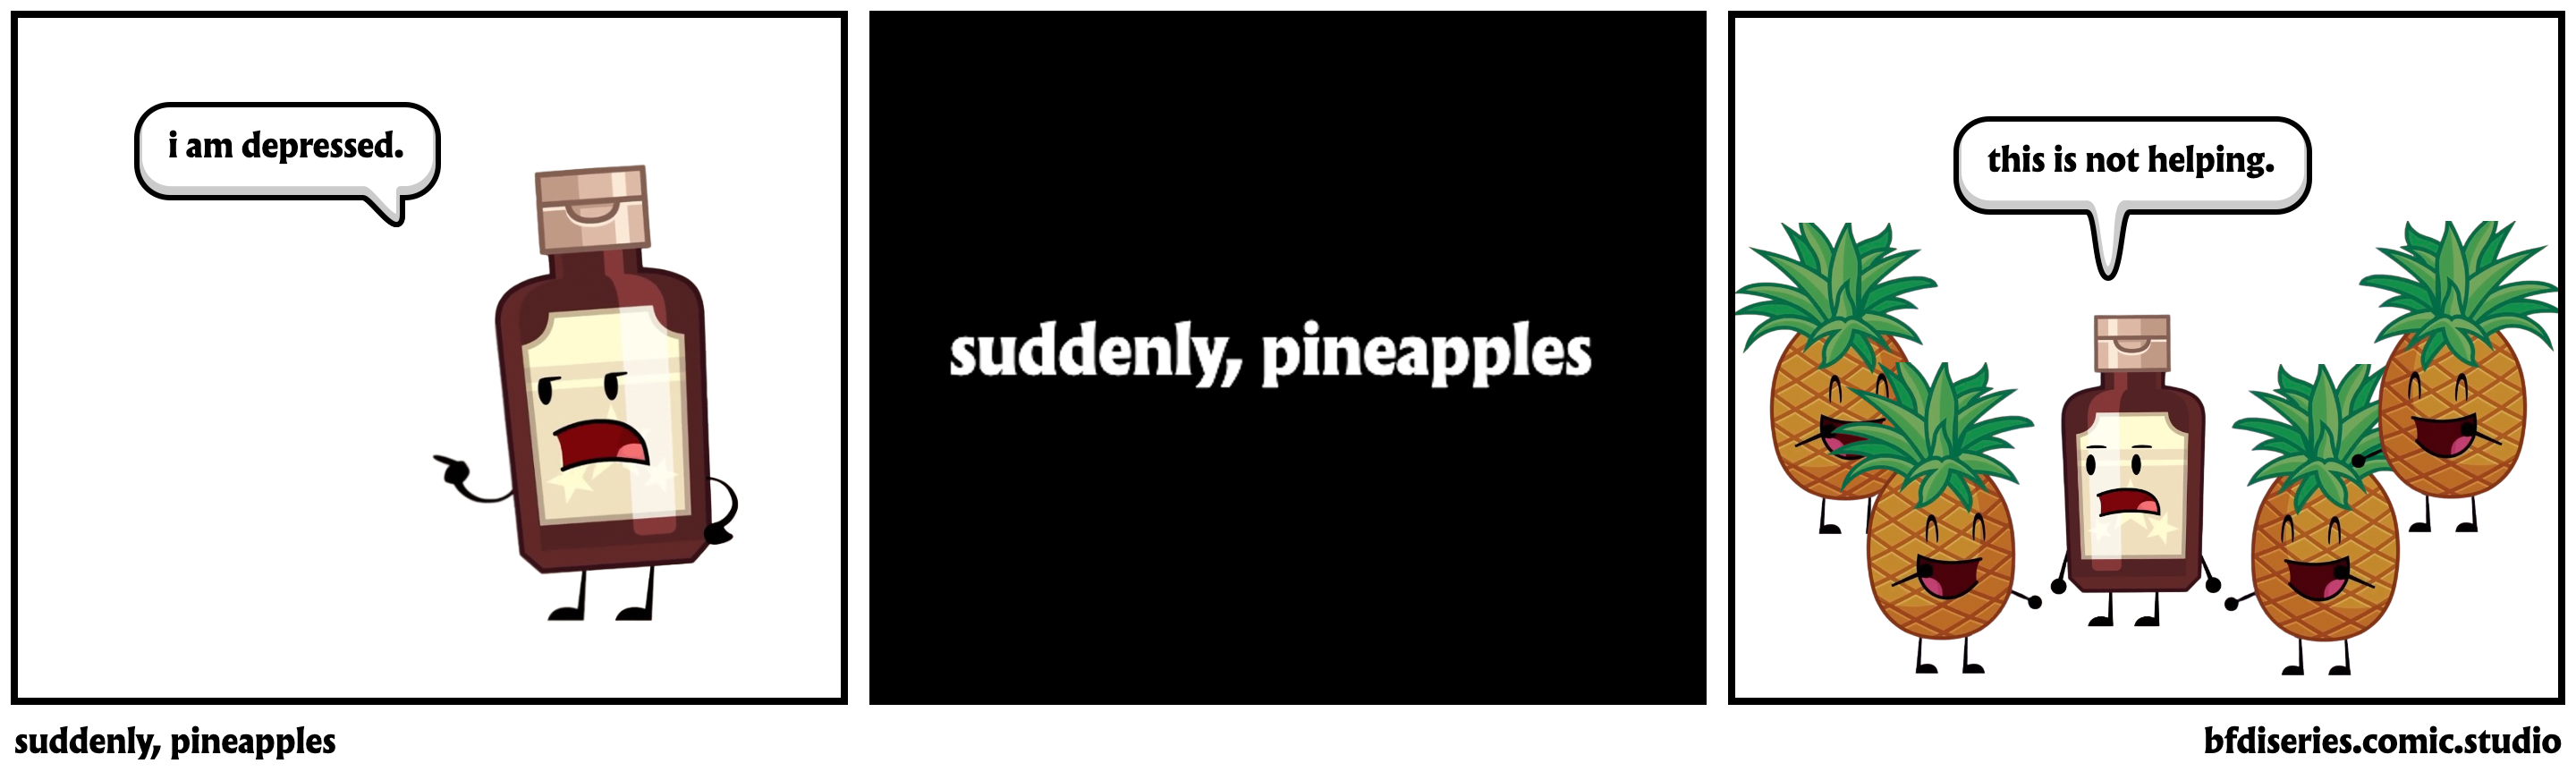 suddenly, pineapples